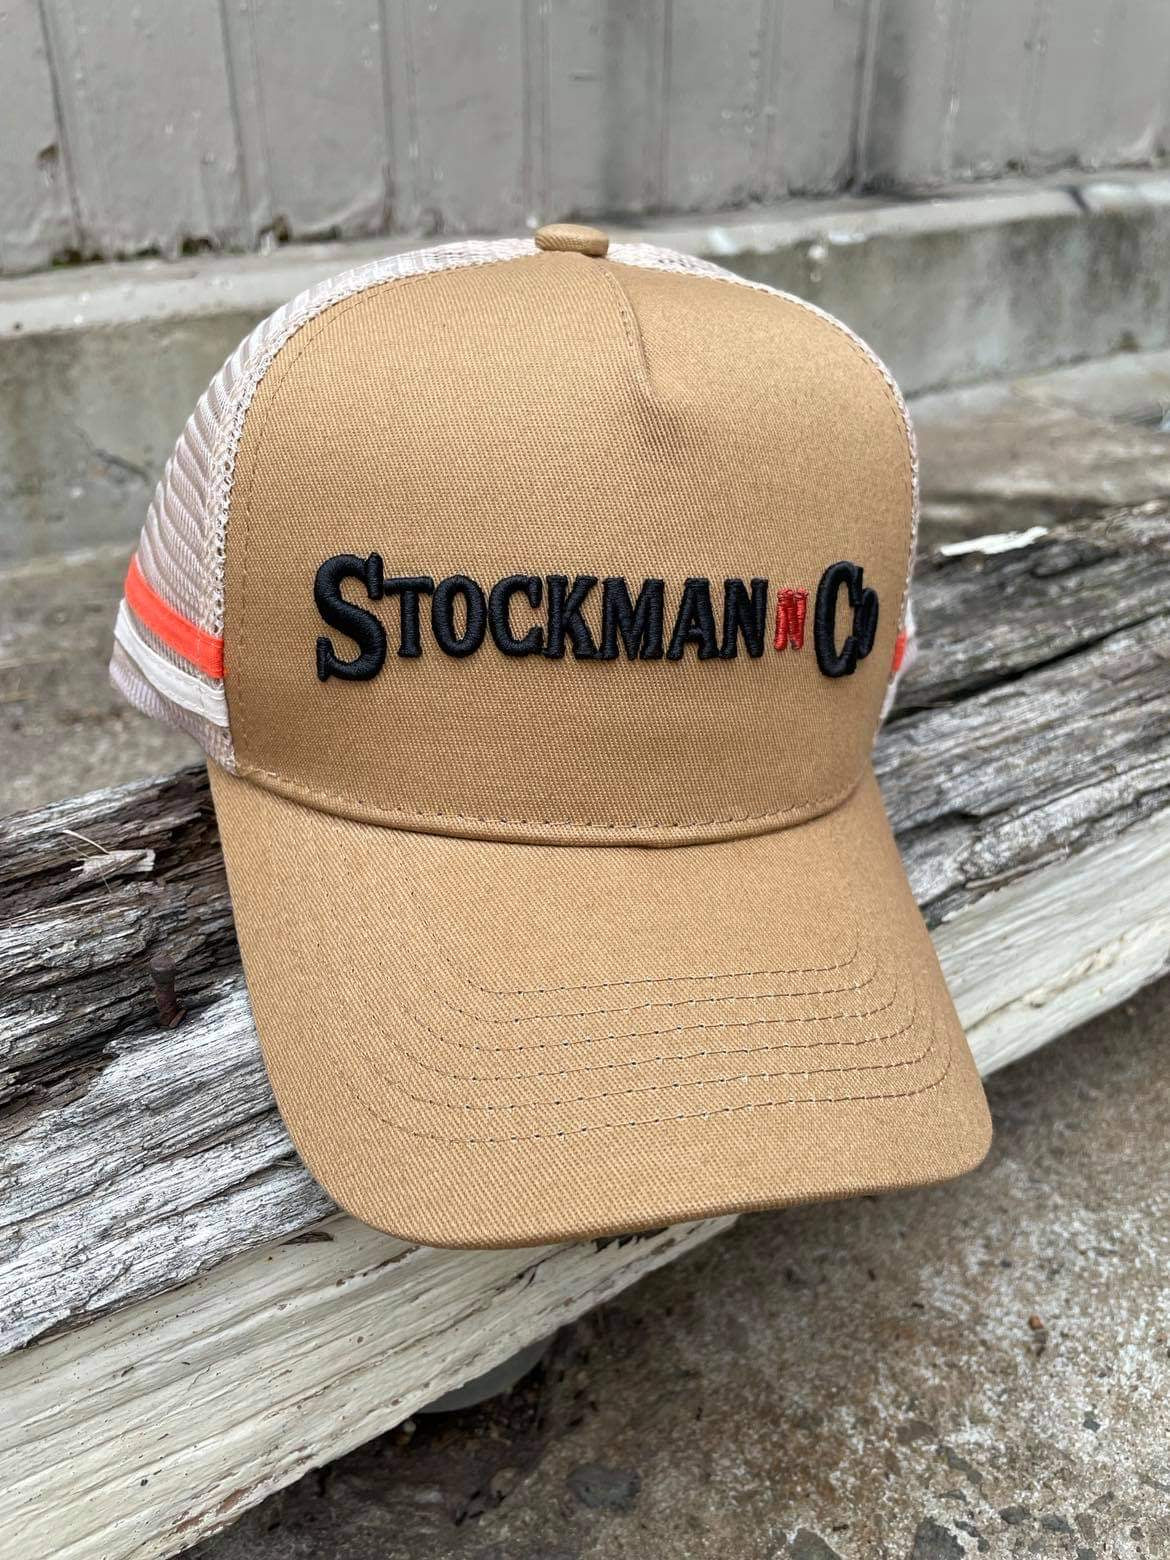 Stockman Original Trucker - STOCKMAN N CO